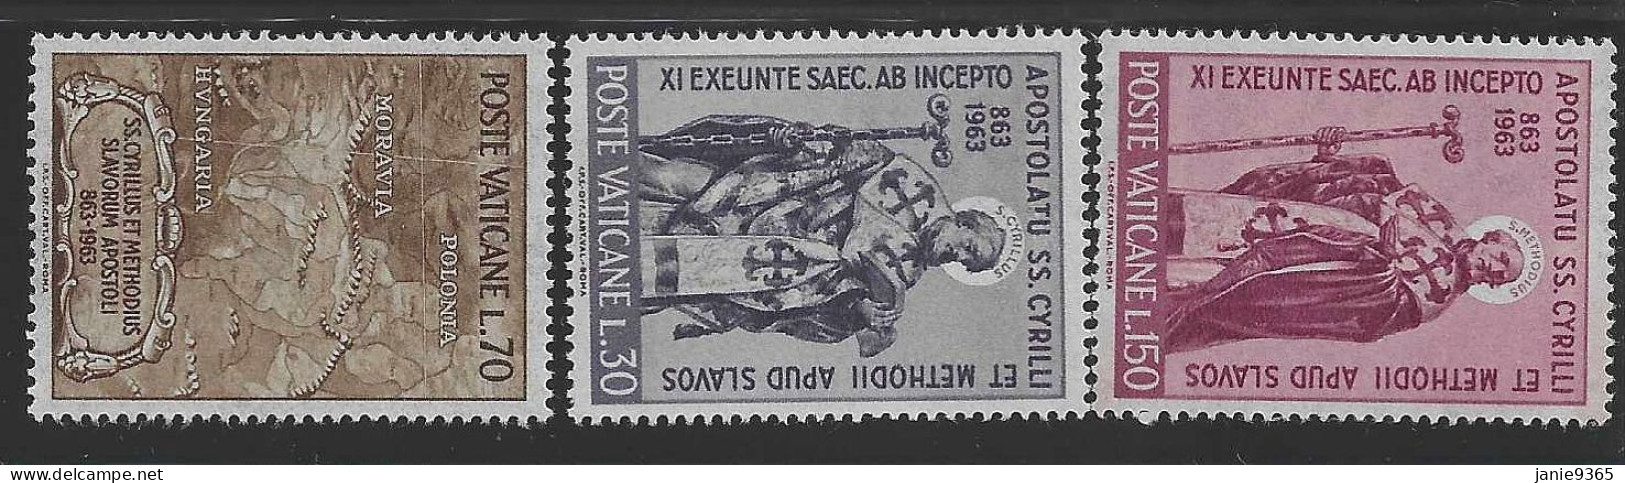 Vatican City S 382-384 1963 St Cyril And Methodius.mint Never Hinged - Ongebruikt